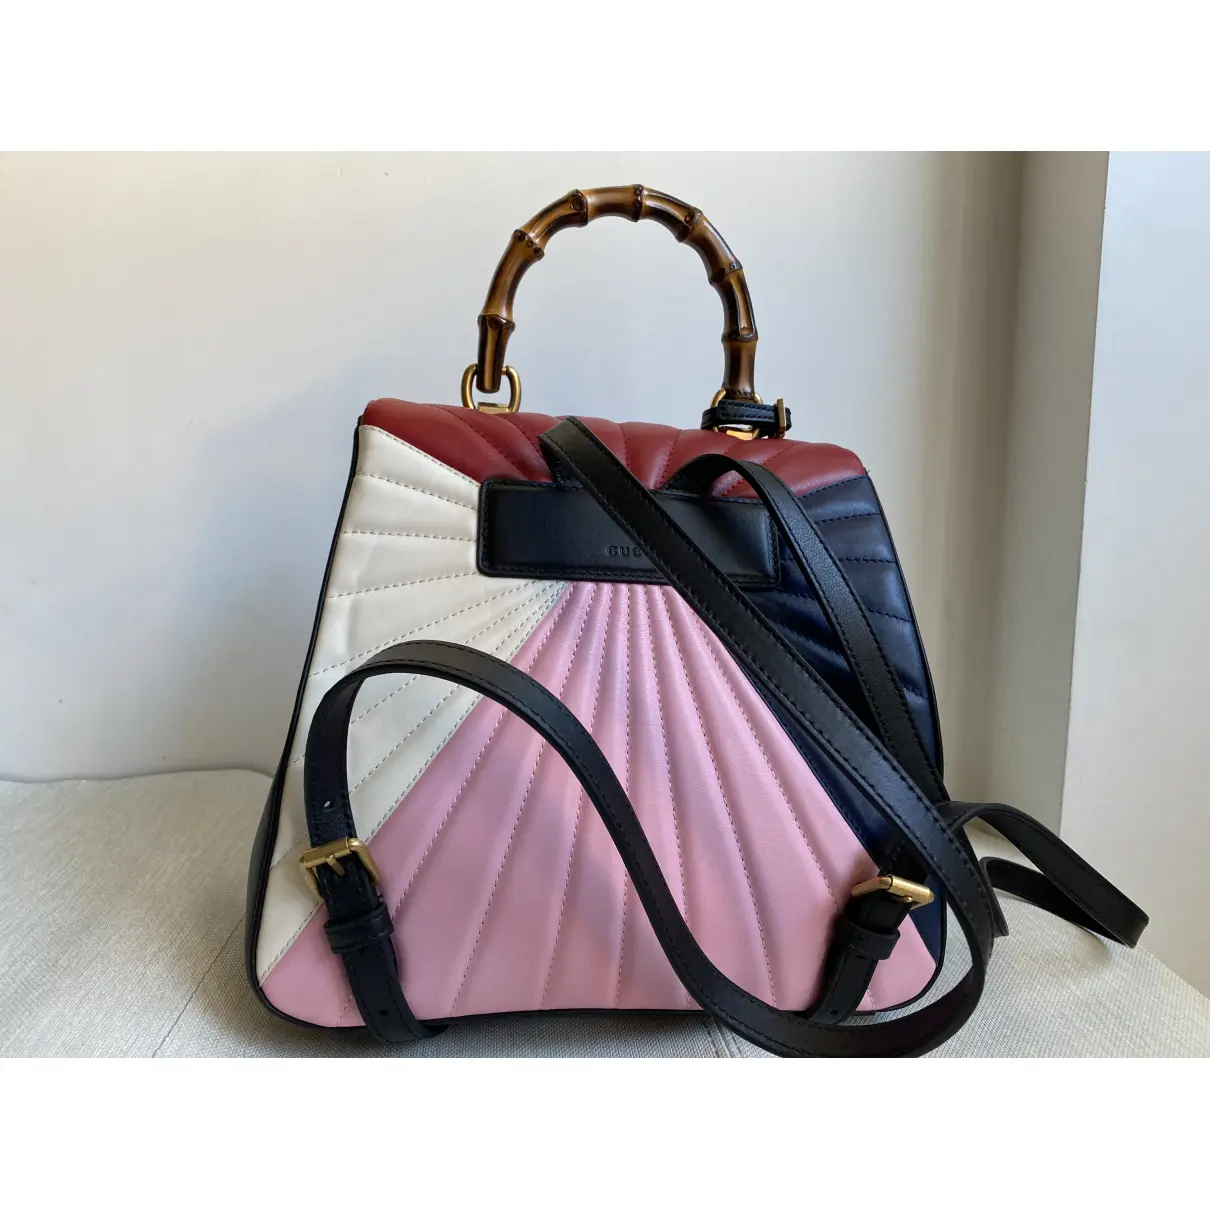 Buy Gucci Queen Margaret leather backpack online